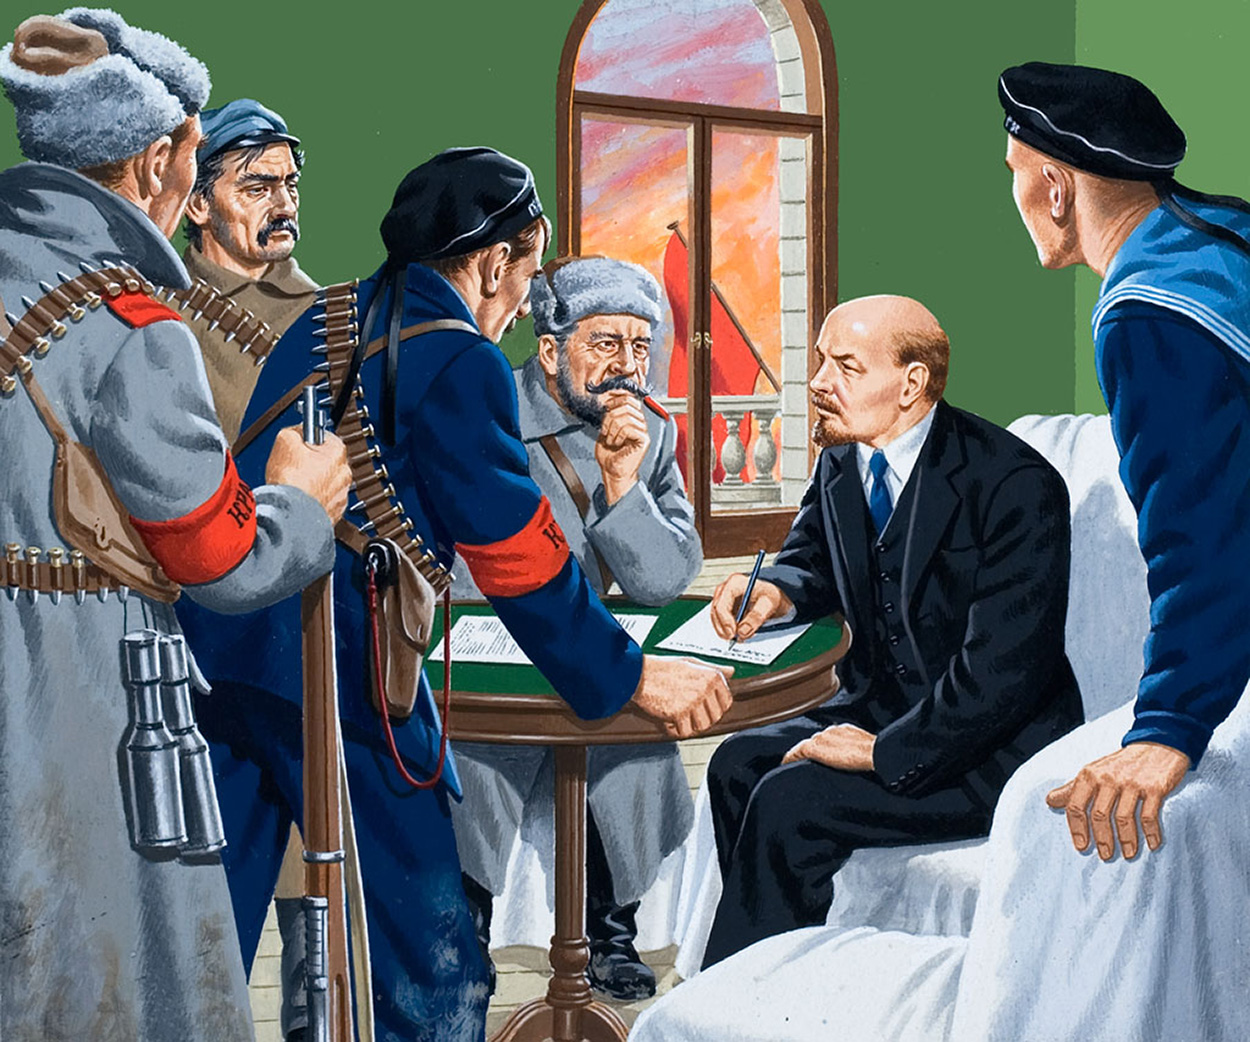 Lenin Returns (Original) art by John Keay at The Illustration Art Gallery